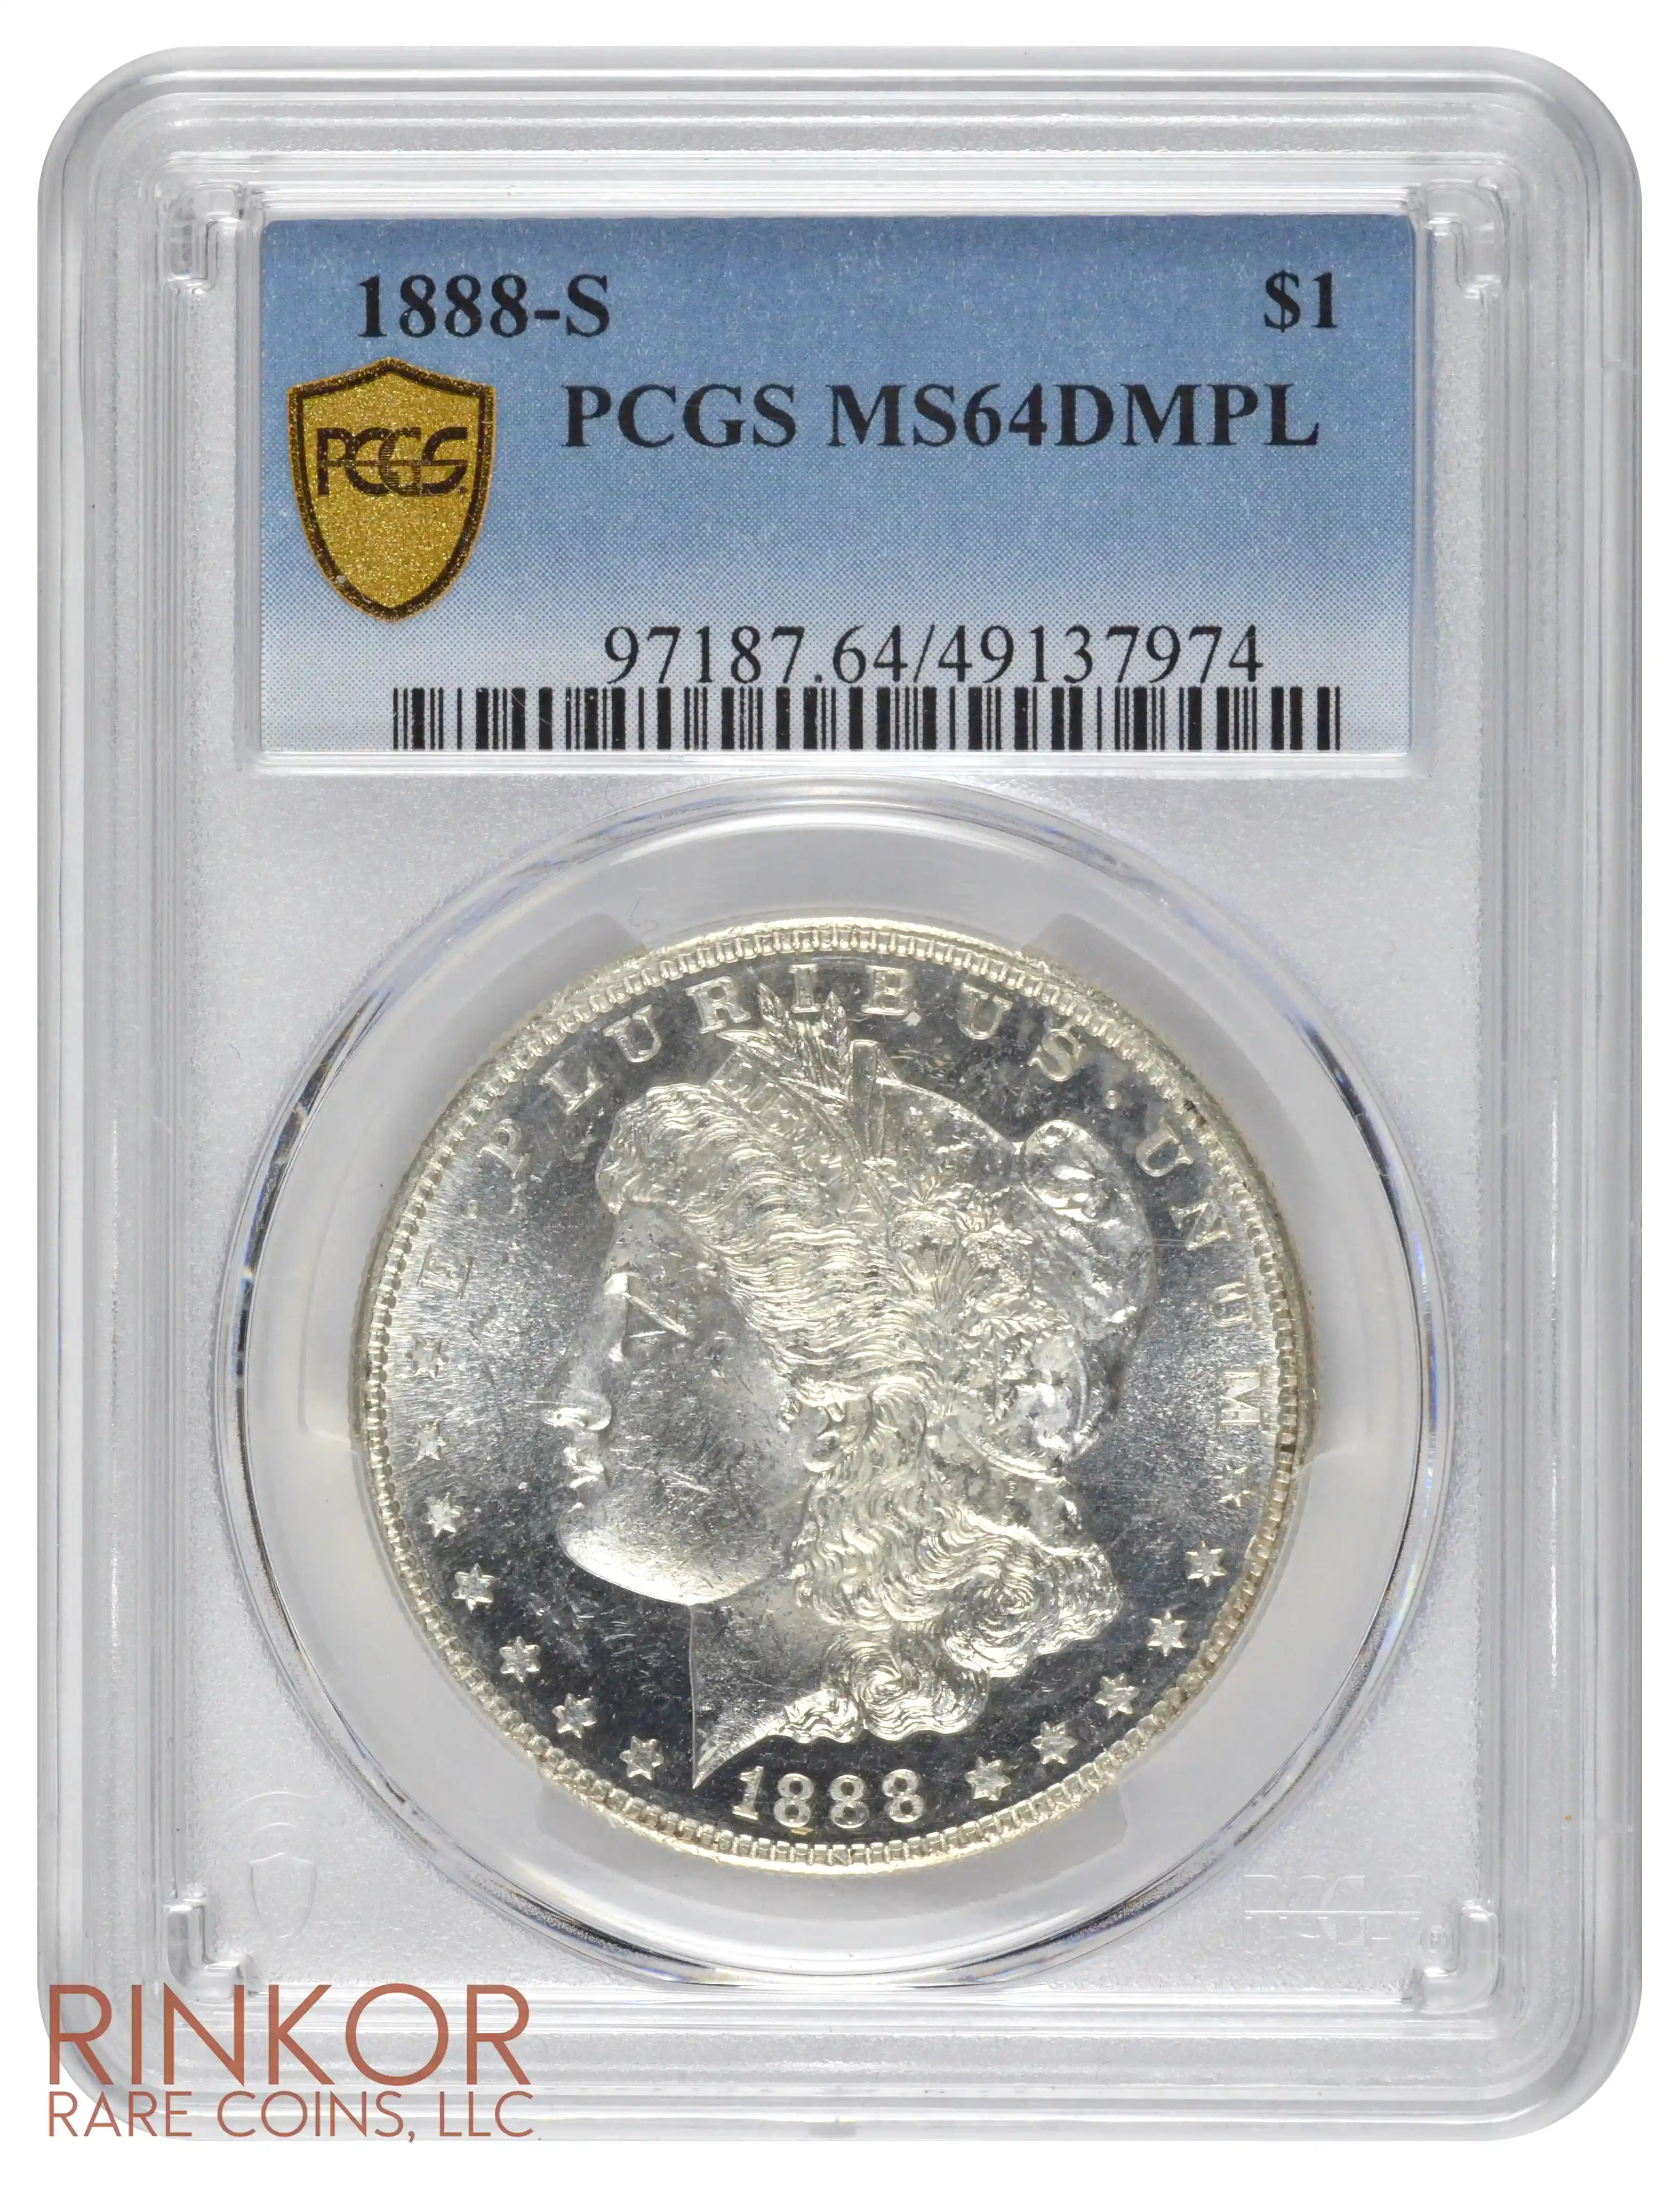 1888-S $1 PCGS MS 64 DMPL